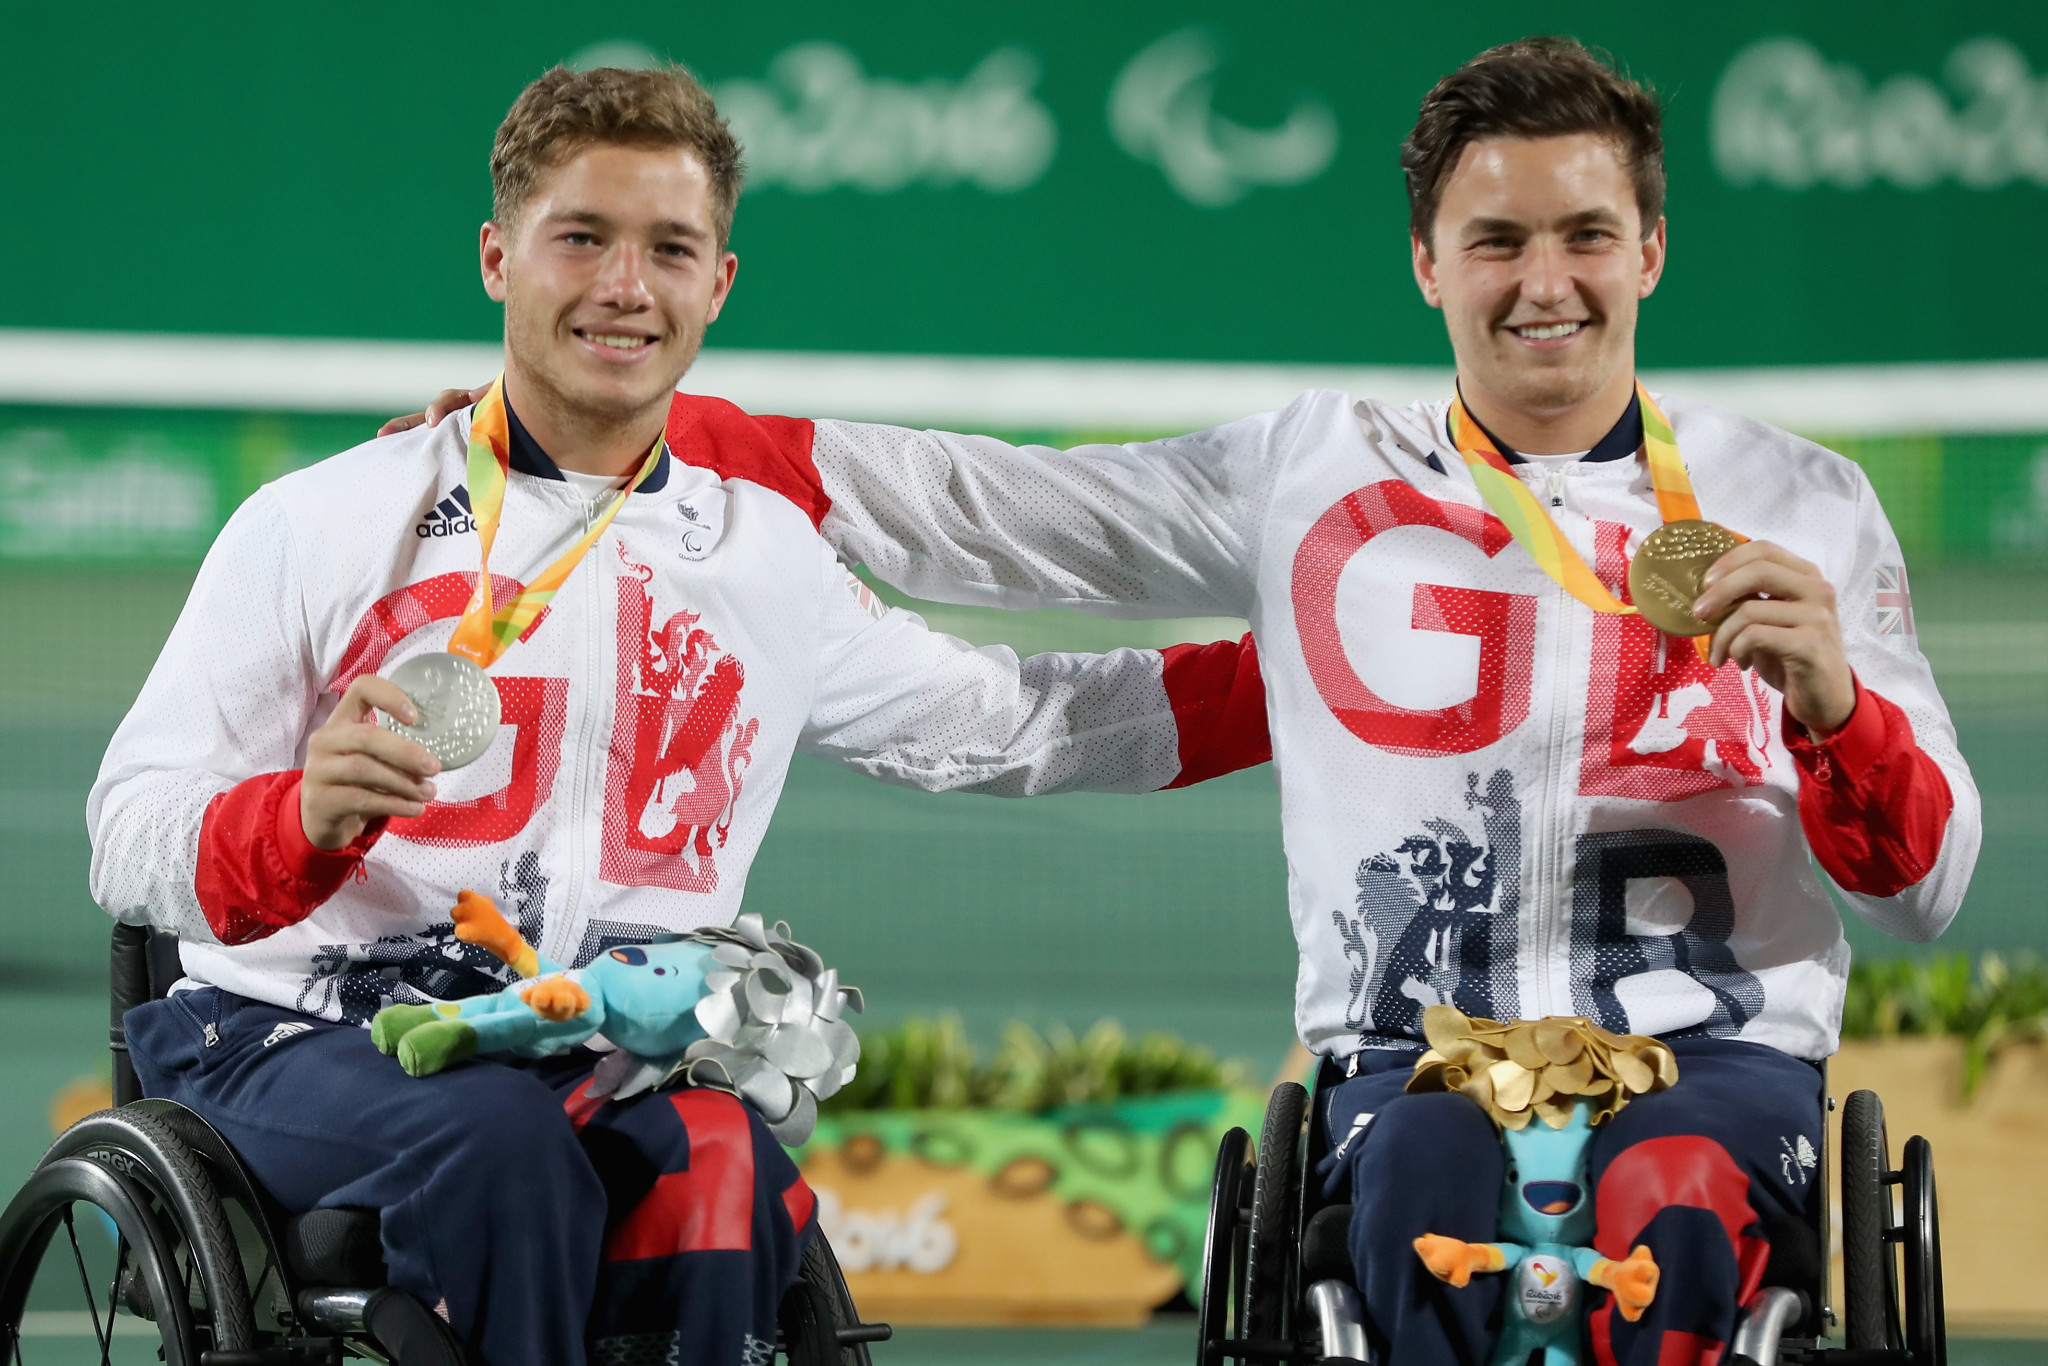 Gordon Reid, right, beat Alfie Hewett to win men's singles gold at Rio 2016 ©Getty Images